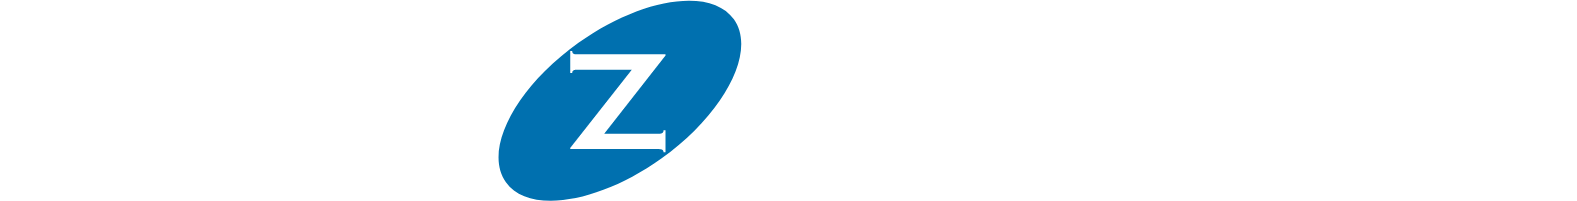 La-Z-Boy
 Logo groß für dunkle Hintergründe (transparentes PNG)